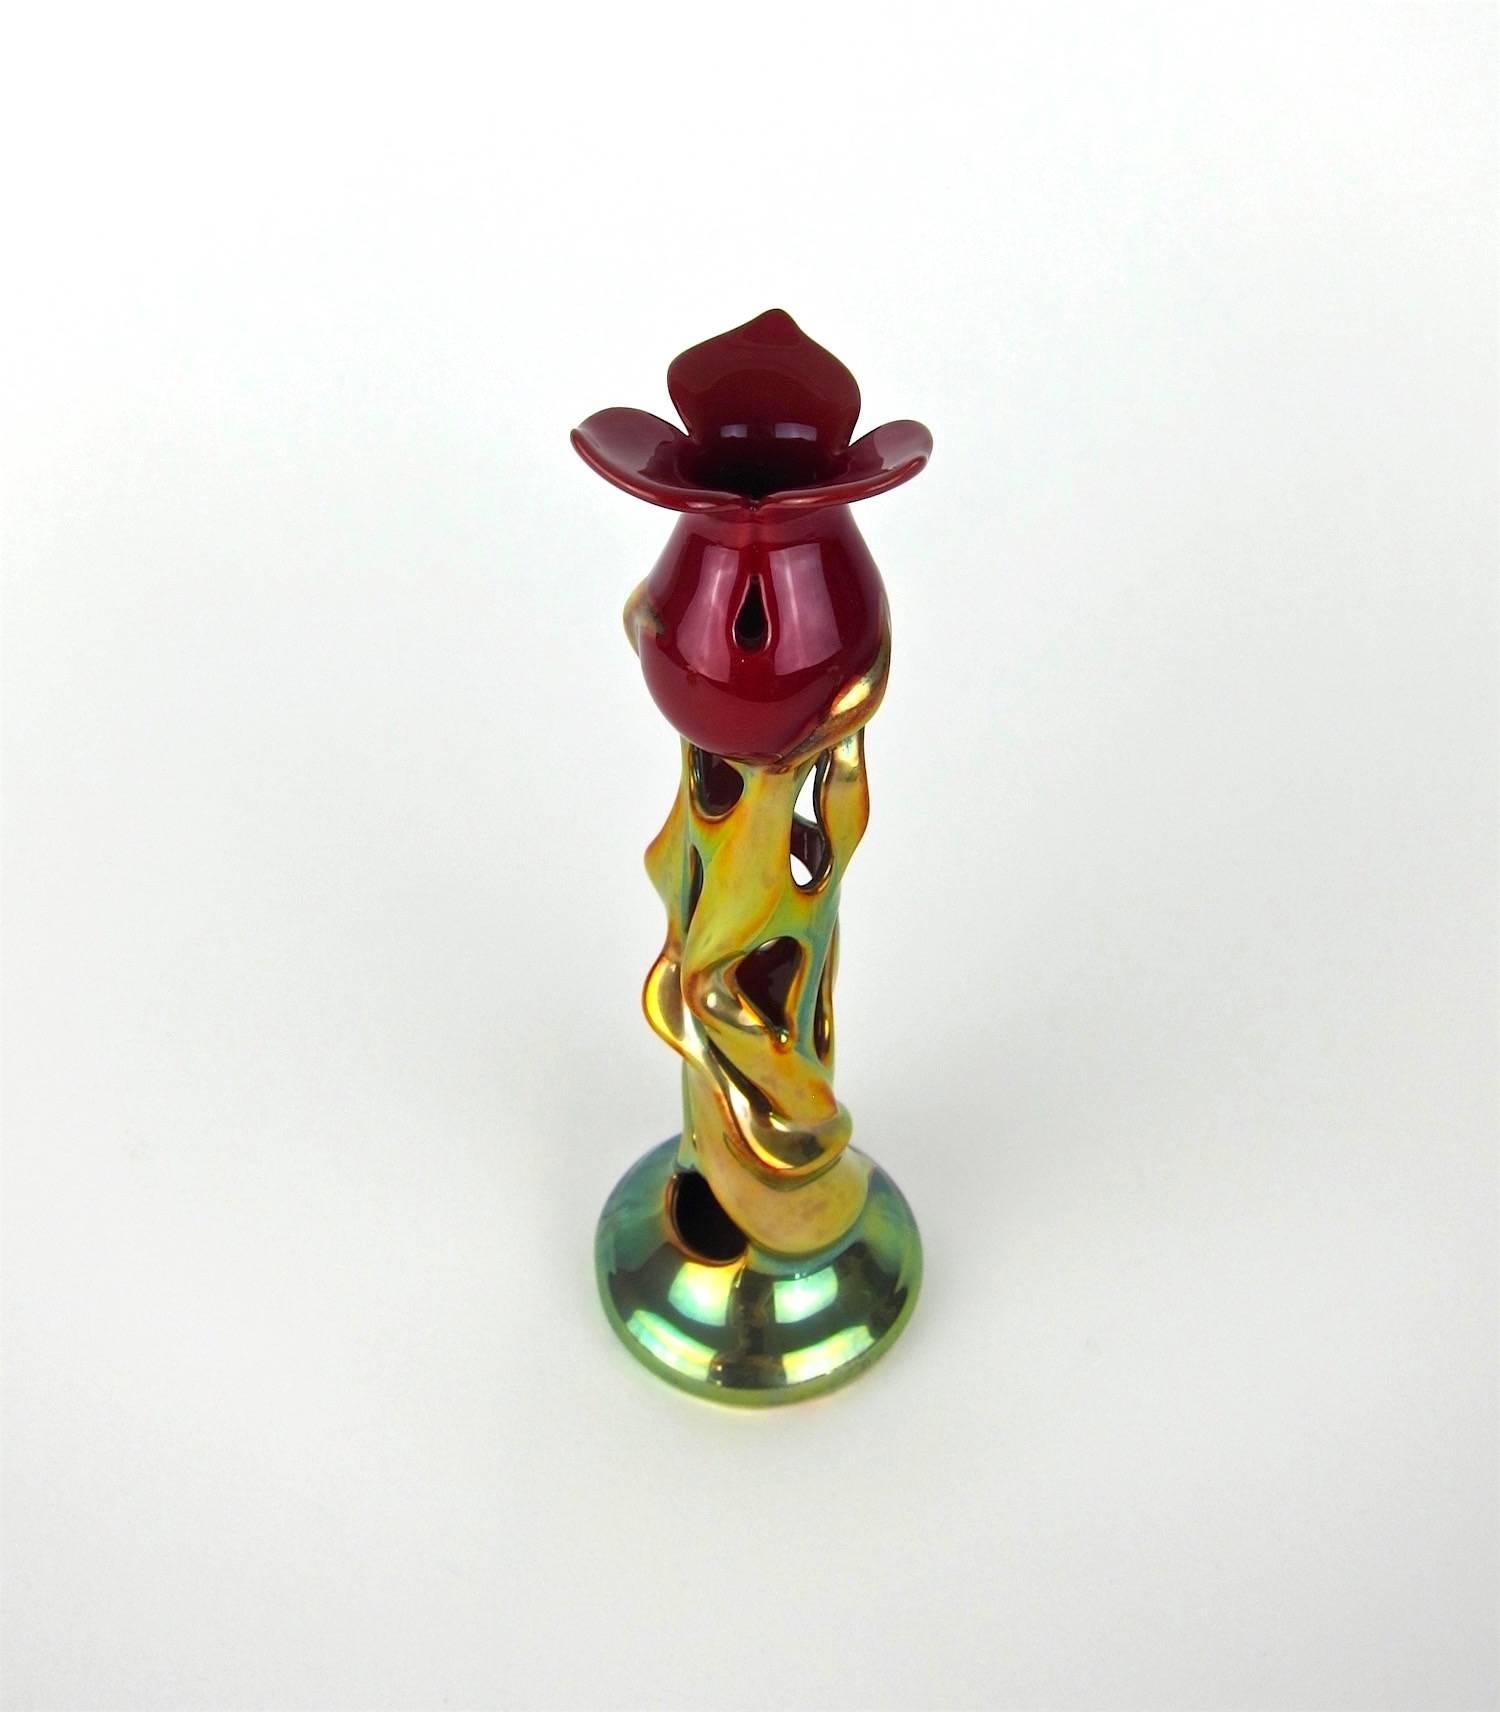 Zsolnay Art Nouveau Porcelain Tulip Candlestick with Eosin Glaze 1